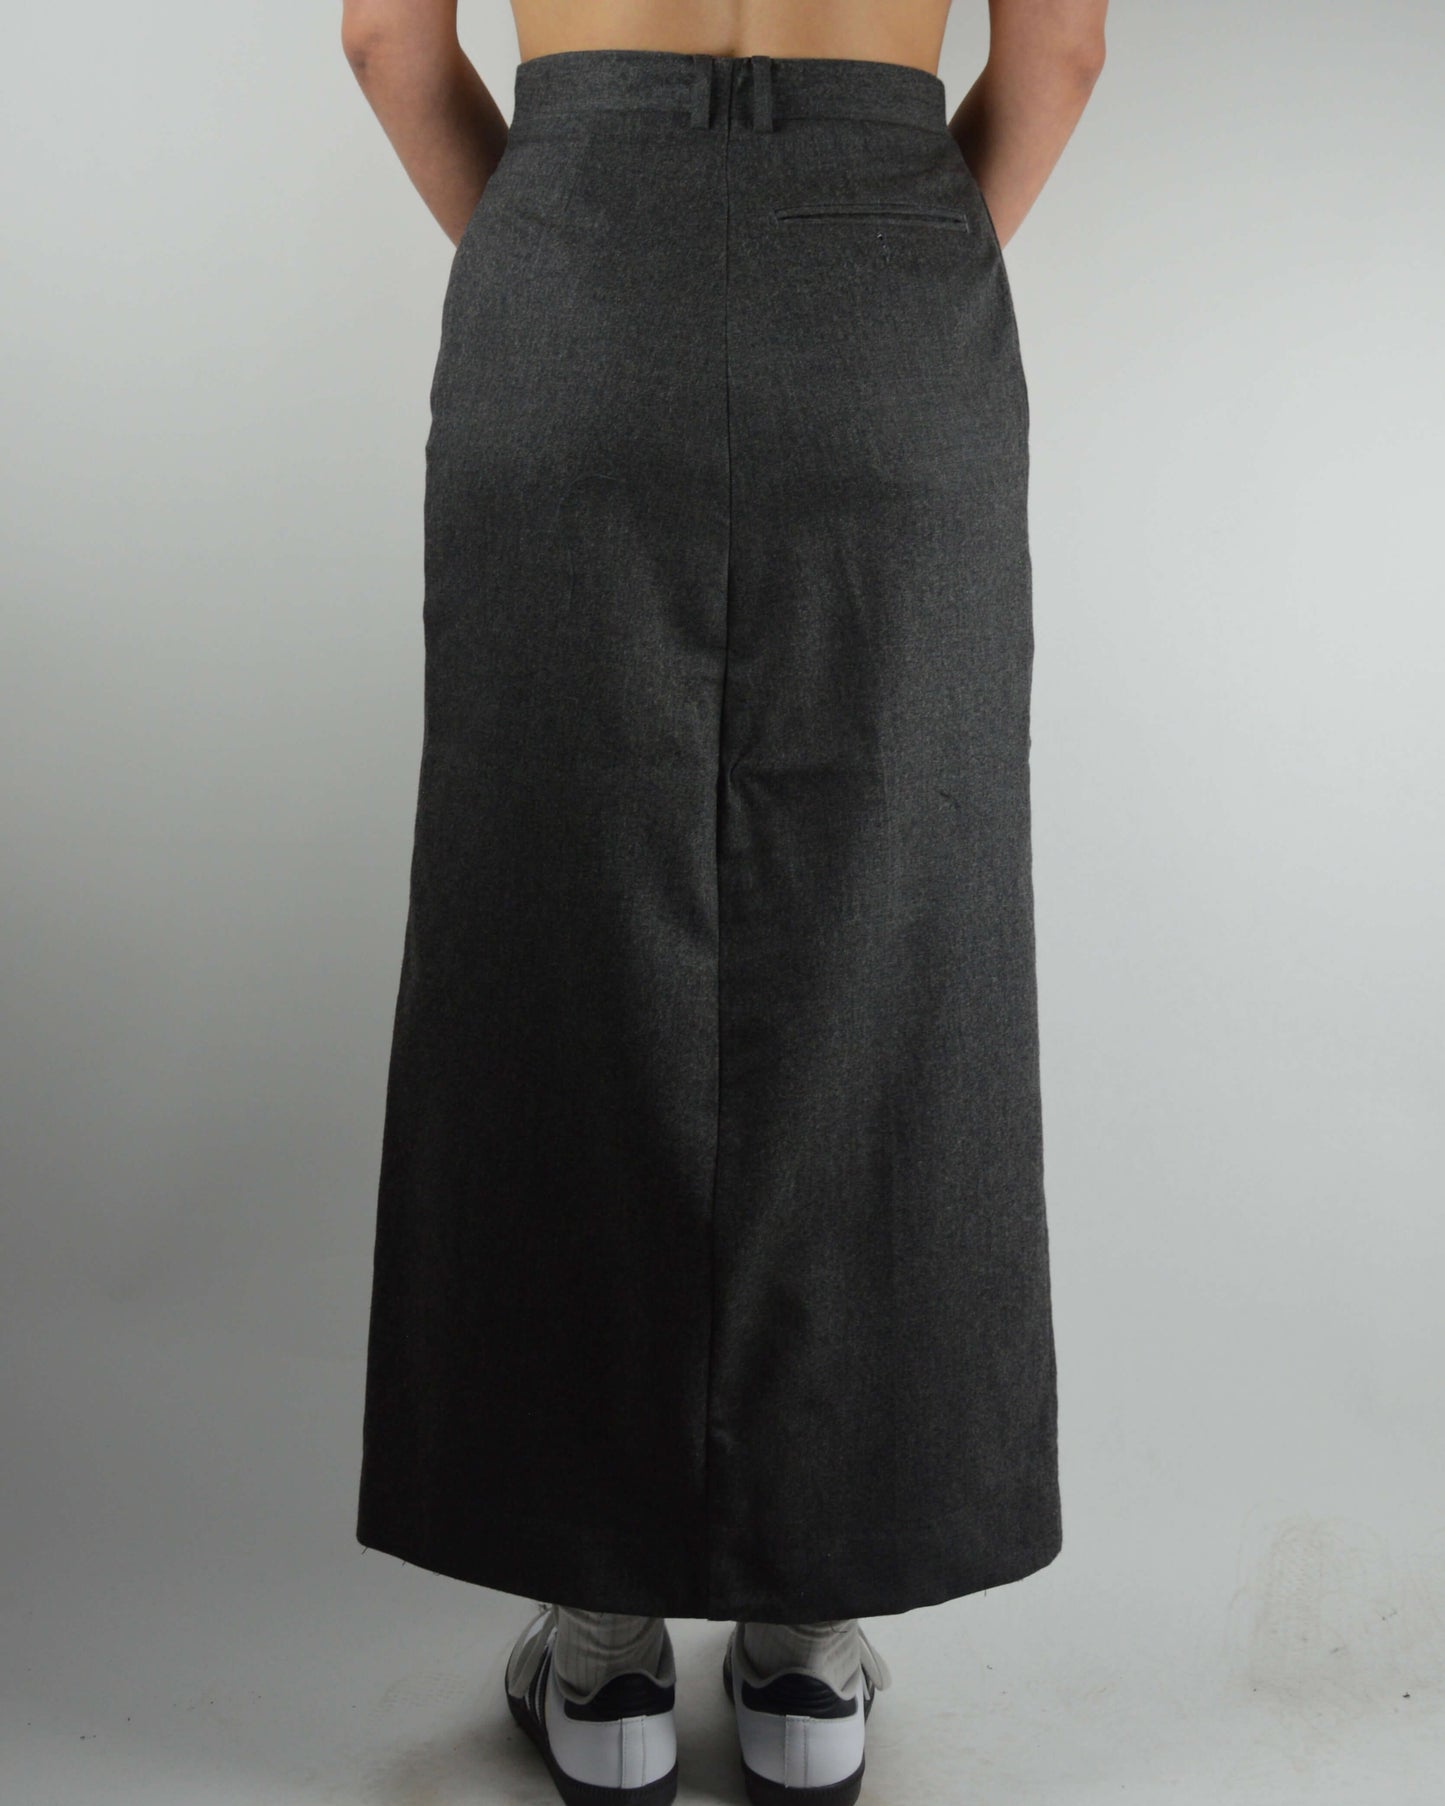 Long Skirt - Dark Grey Texture (XS/S)